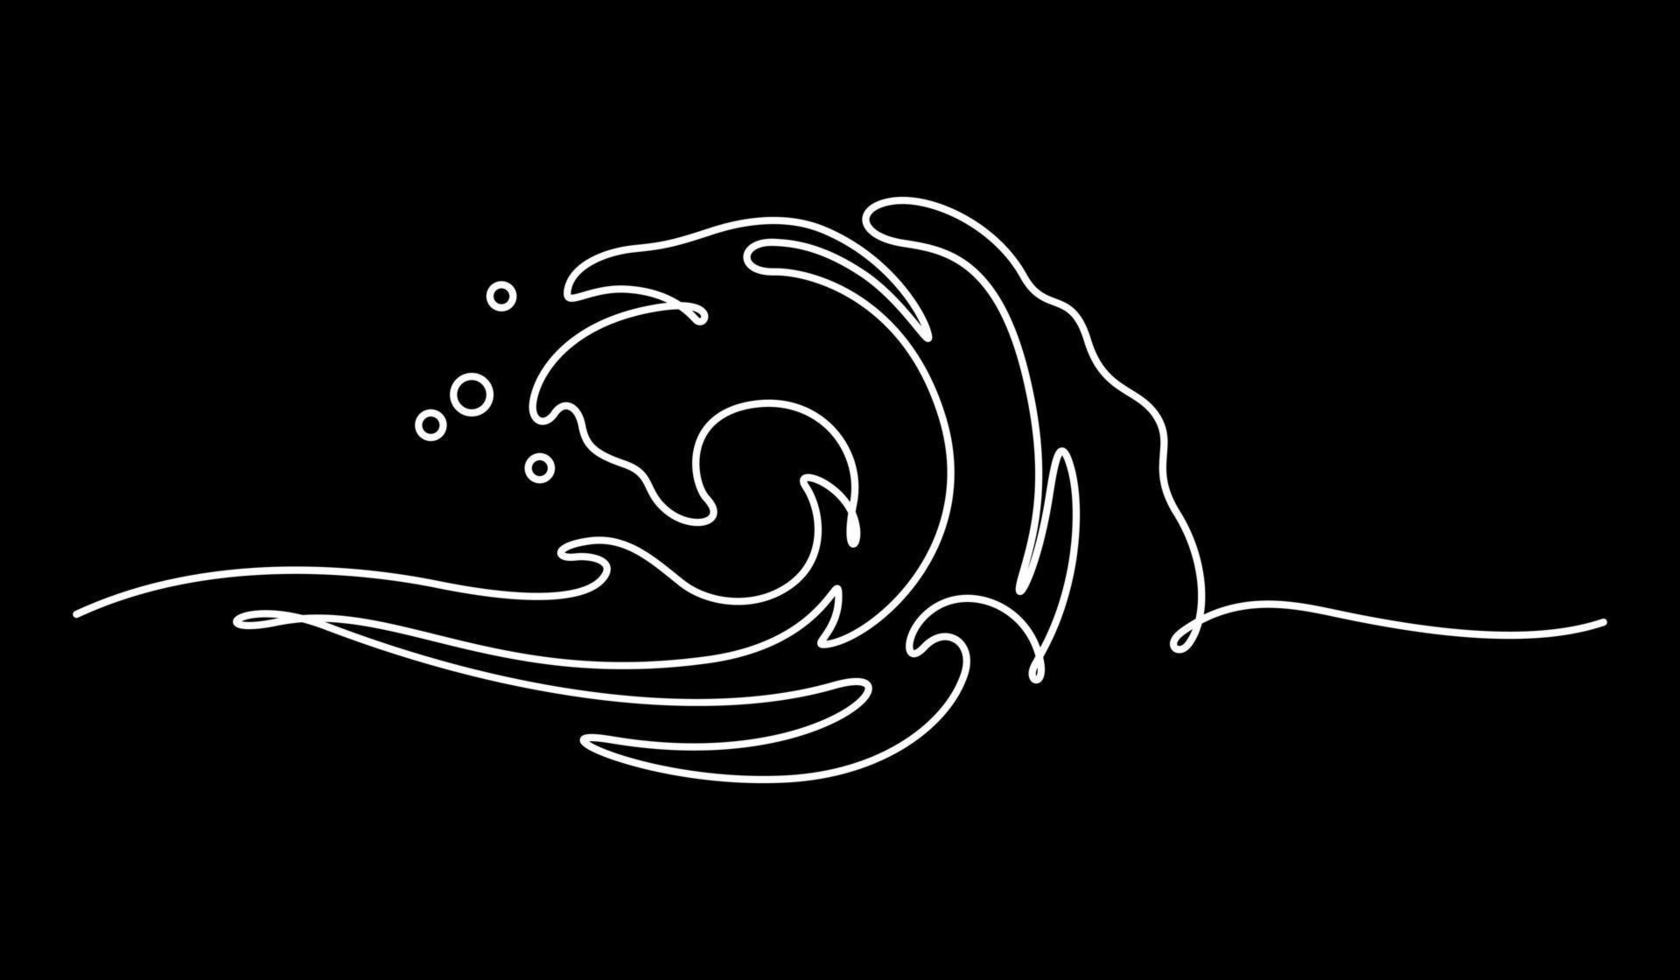 sea ocean waves line art illustration vector